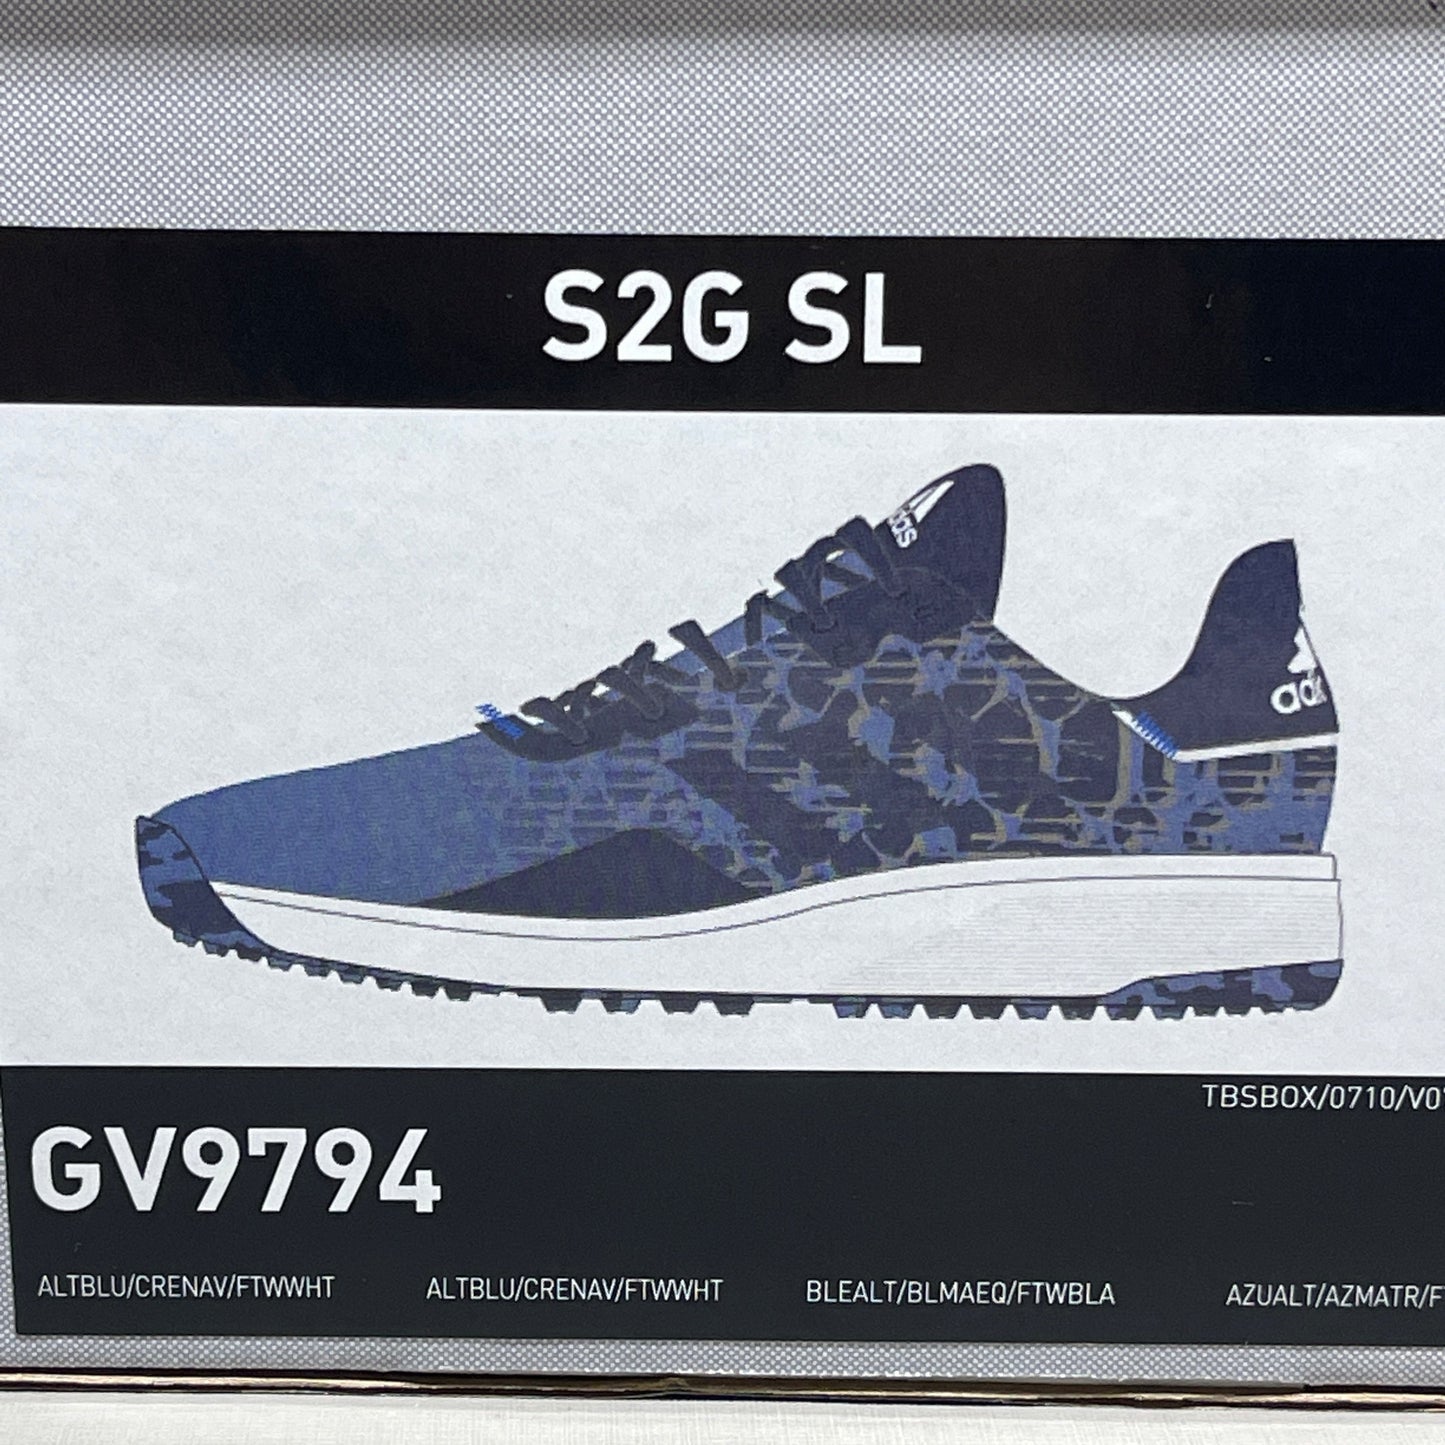 ADIDAS Golf Shoes S2G SL Waterproof Men's Sz 8.5 Blue / Navy / White GV9794 (New)